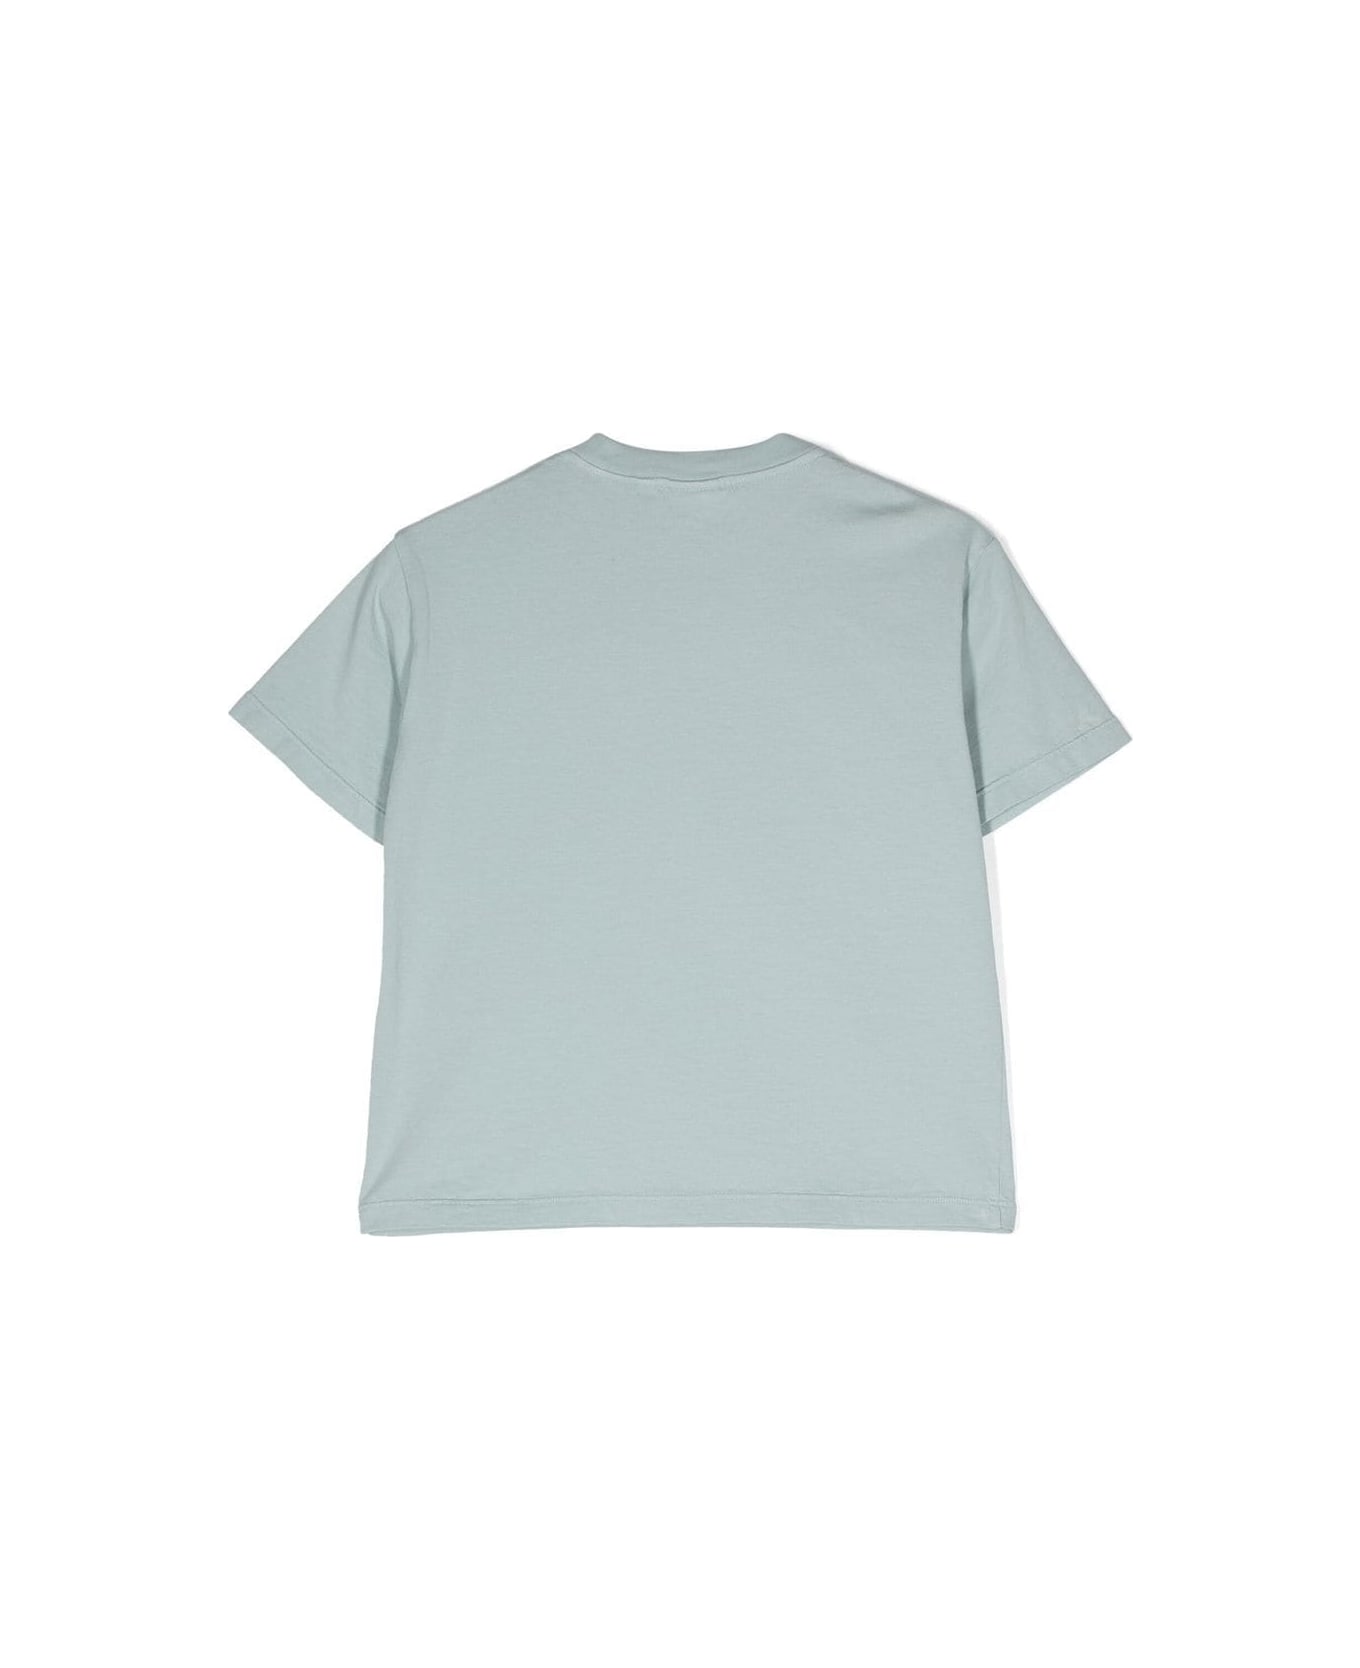 Aspesi Short Sleeves T-shirt - Water